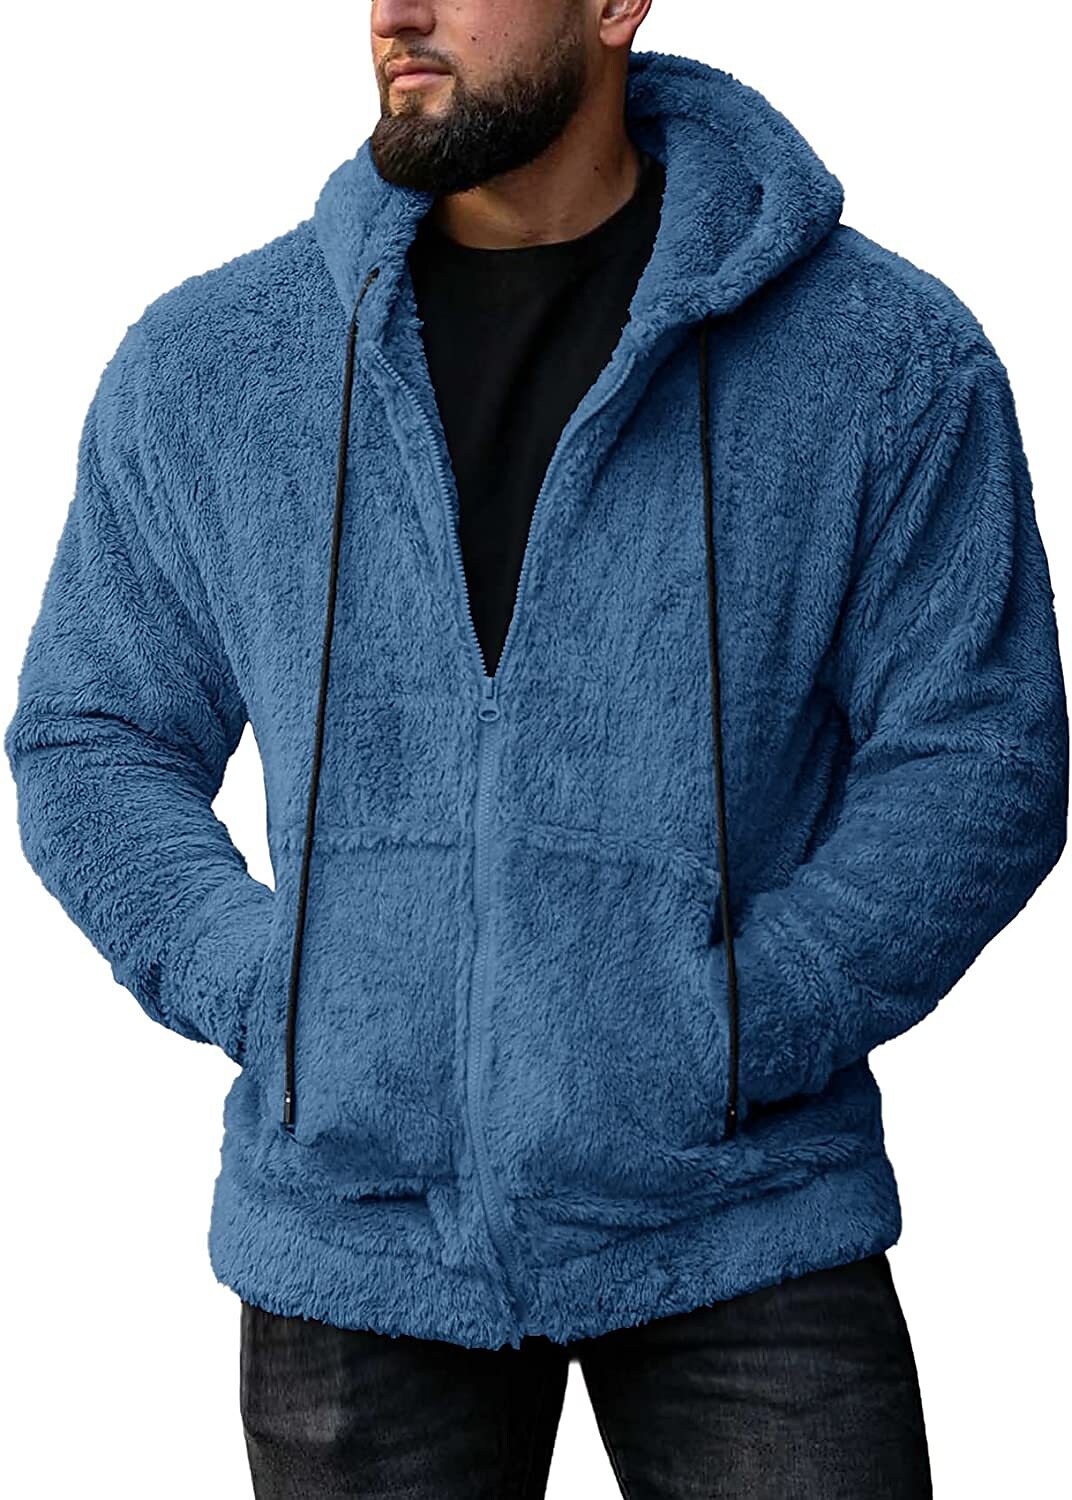 Men's Casual Solid Color Long Sleeve Hooded Pocket Fleece Sweatshirt